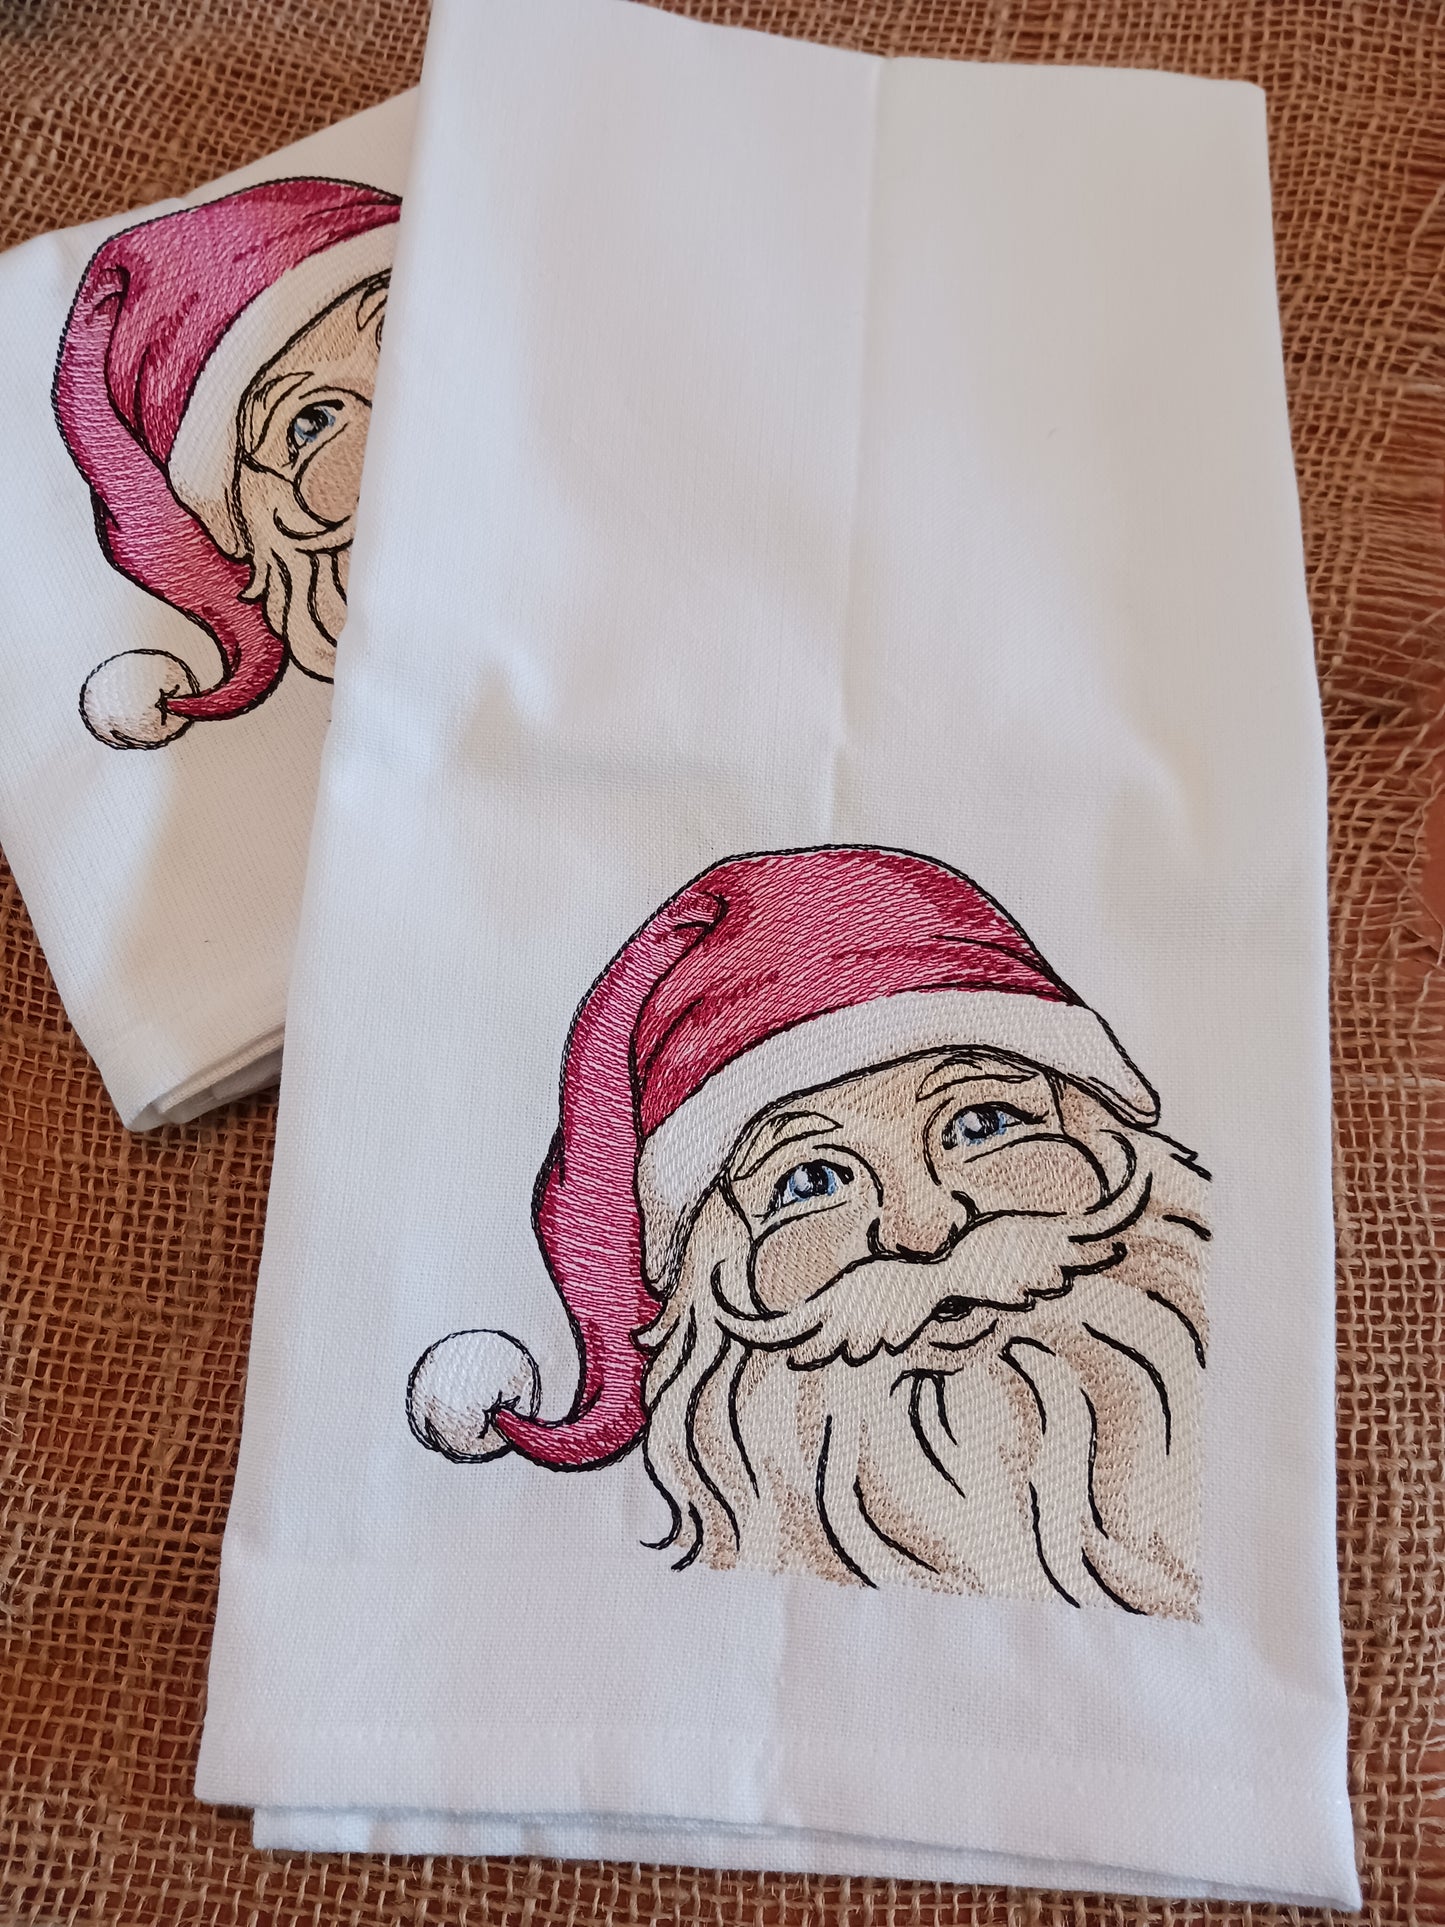 Embroidered Dish Towels/Tea Towels